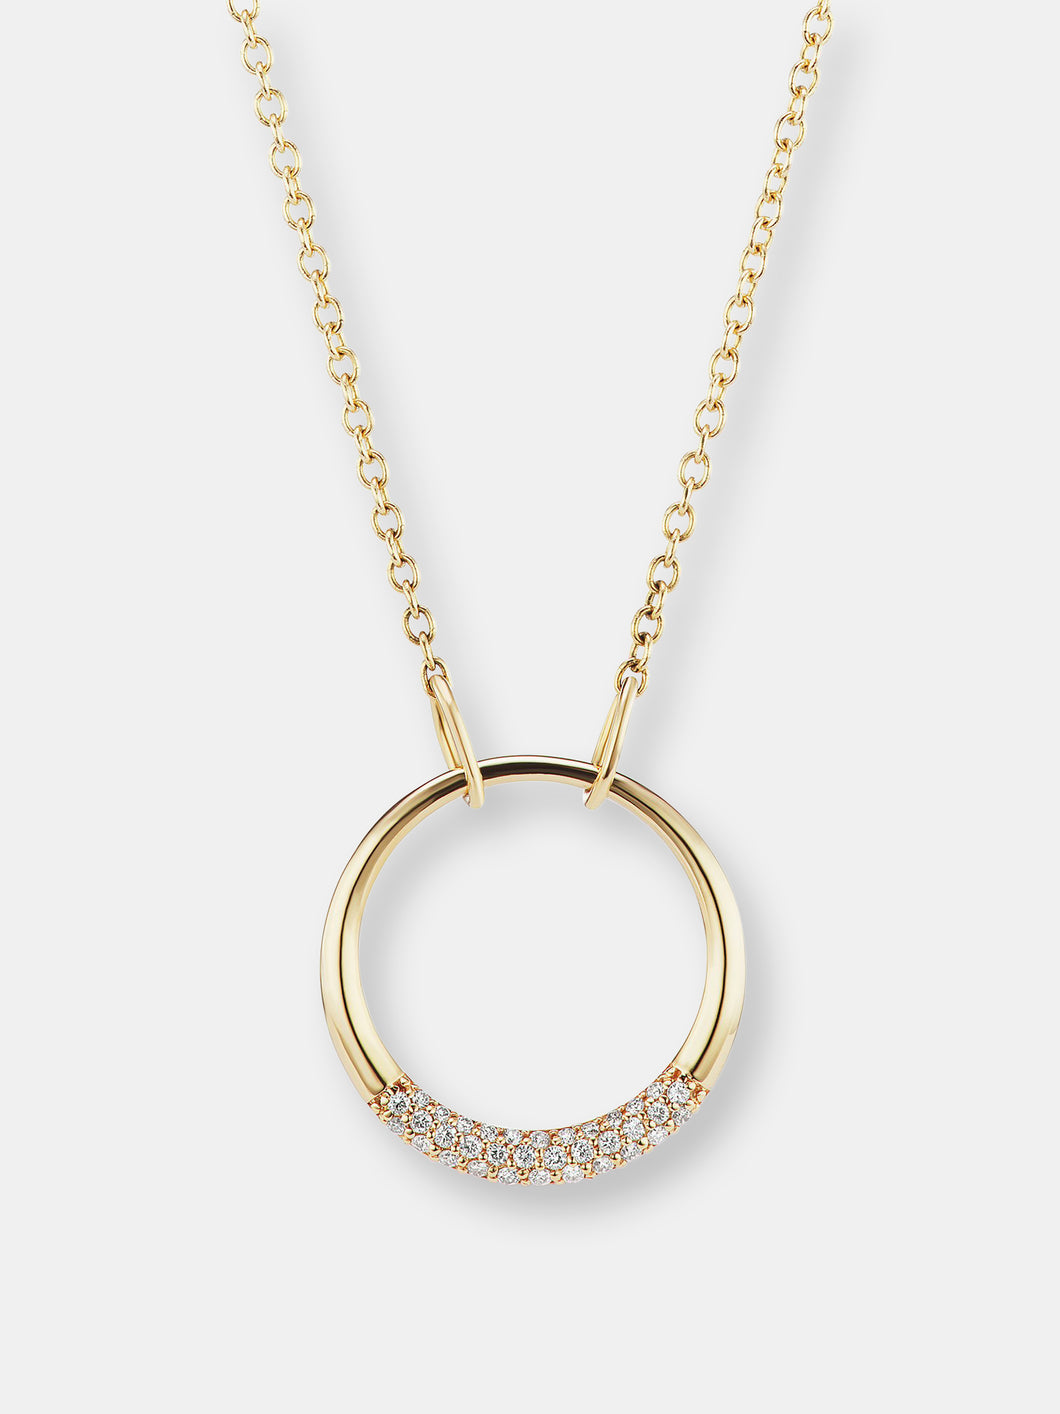 The Gold Petite Diamond Loop Necklace